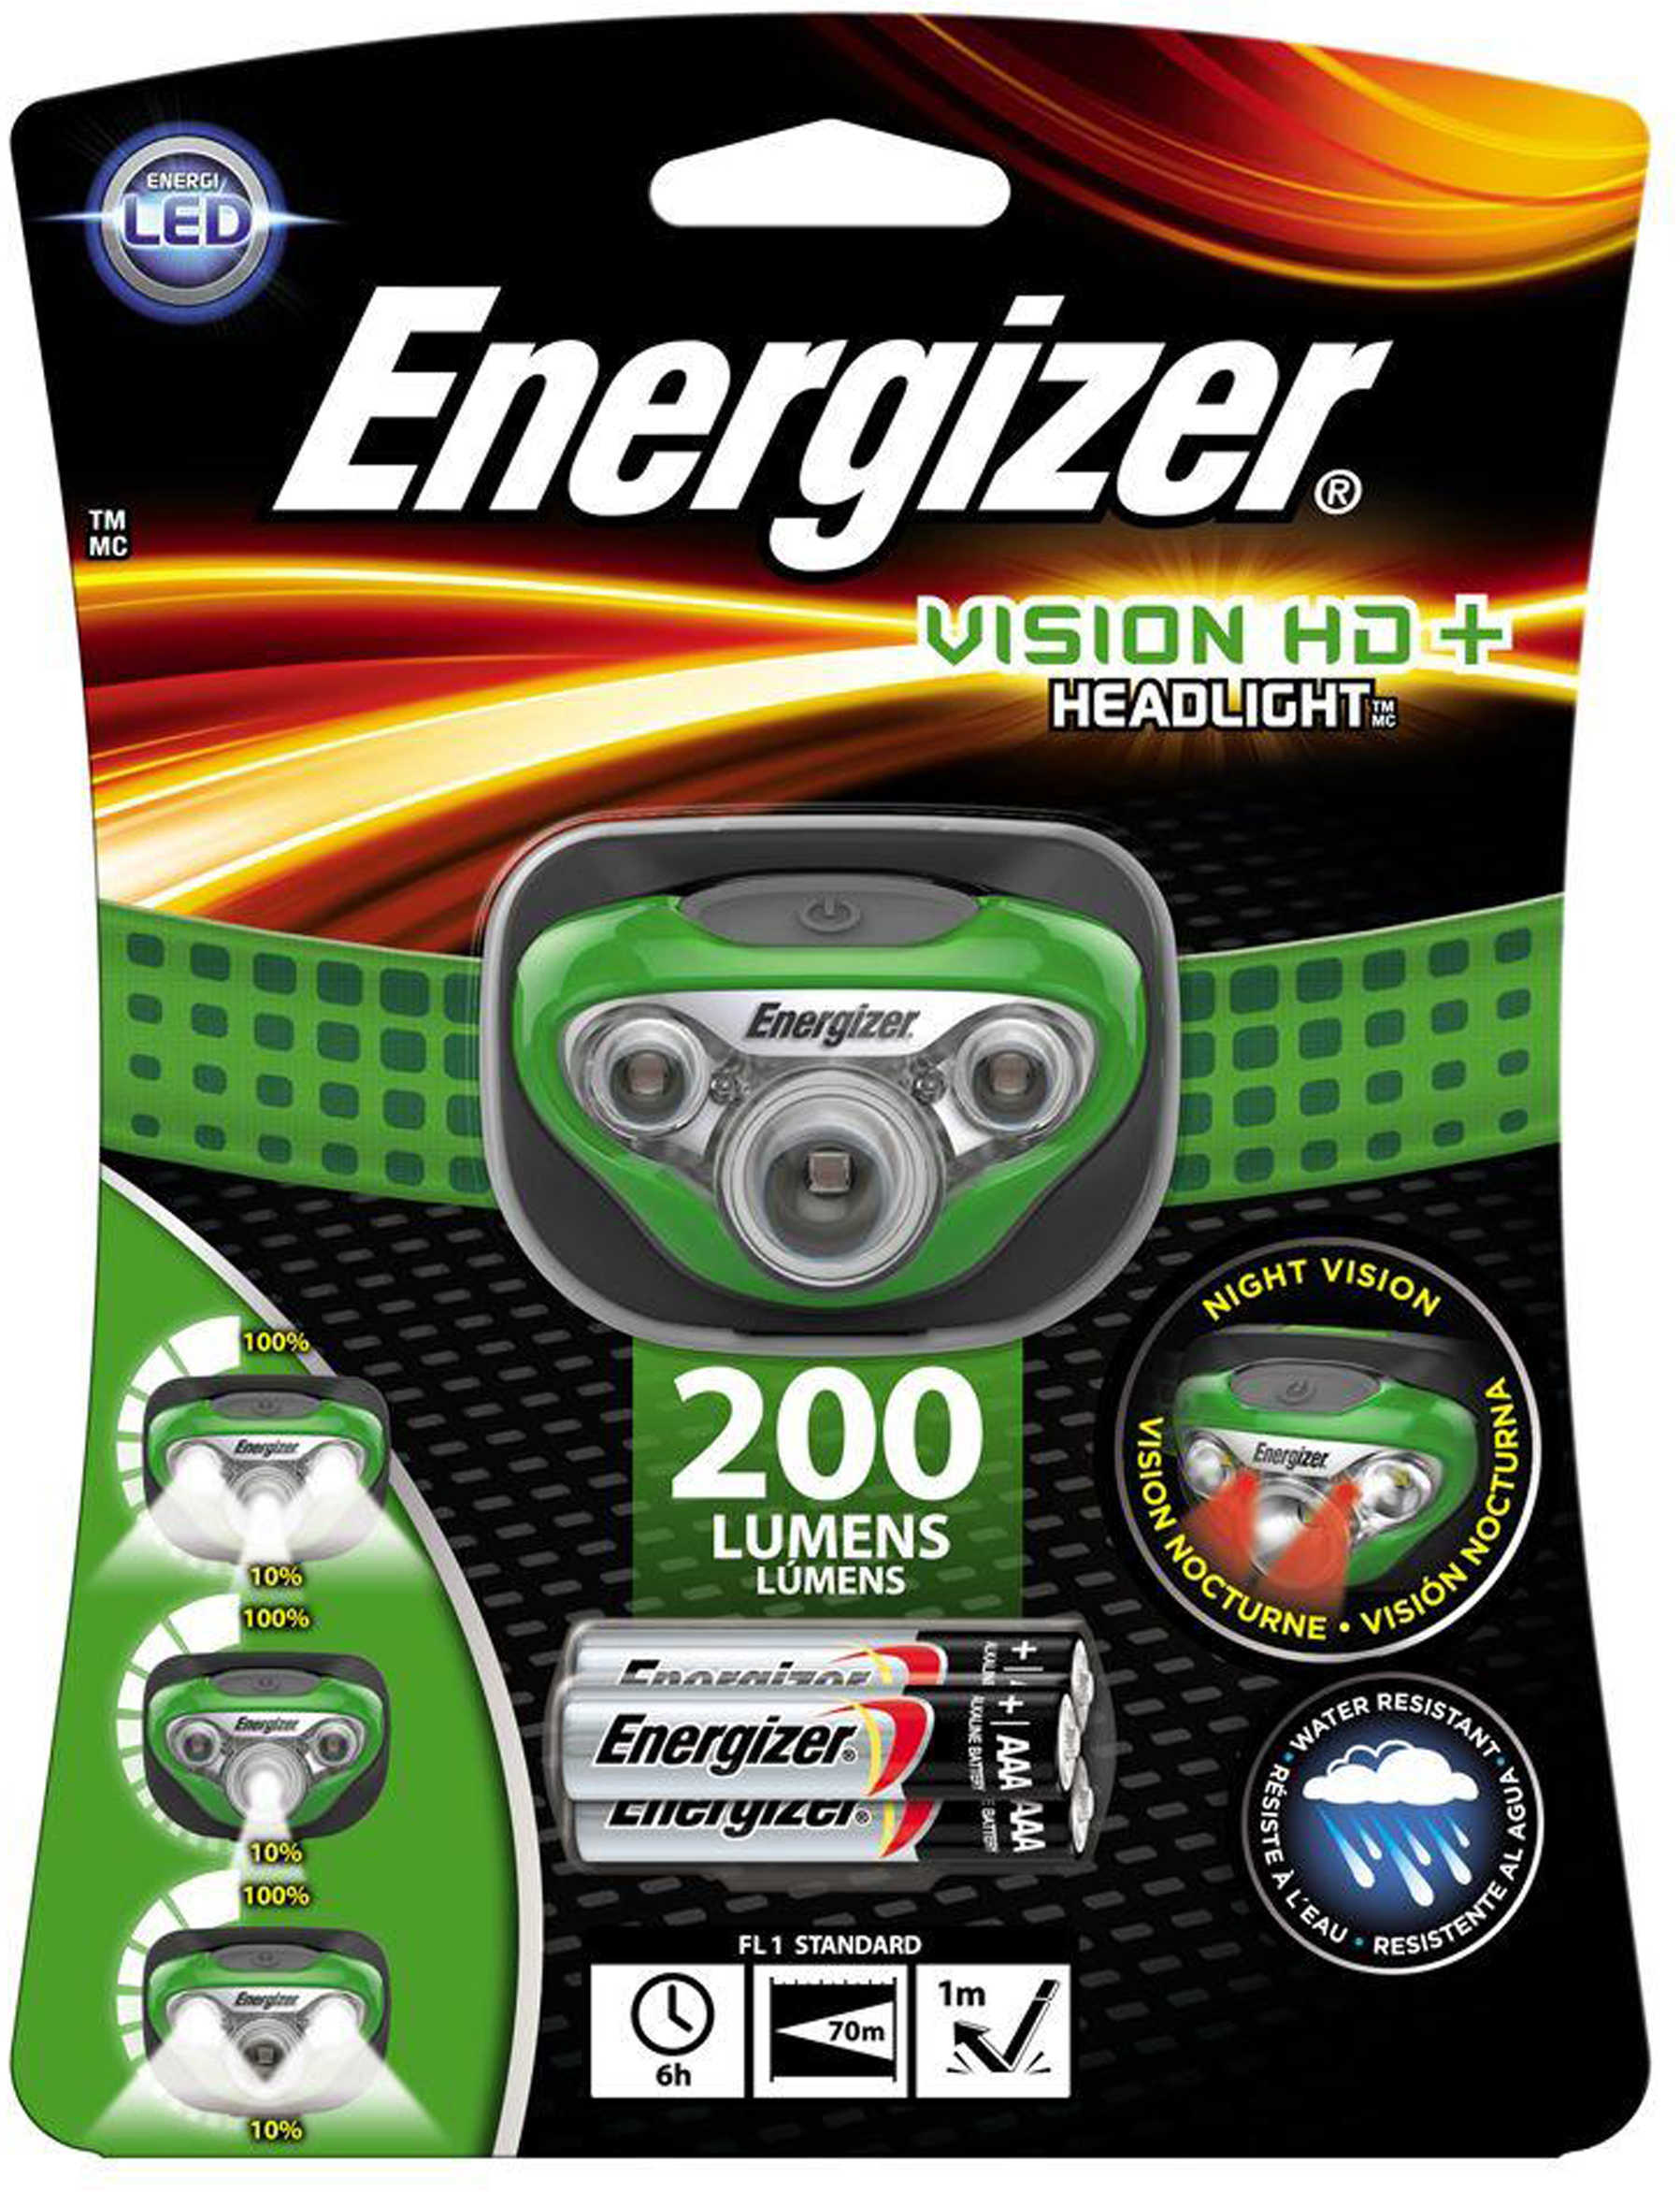 Energizer Vision Headlamp HD+ LED, 200 Lumens Md: HDC32E